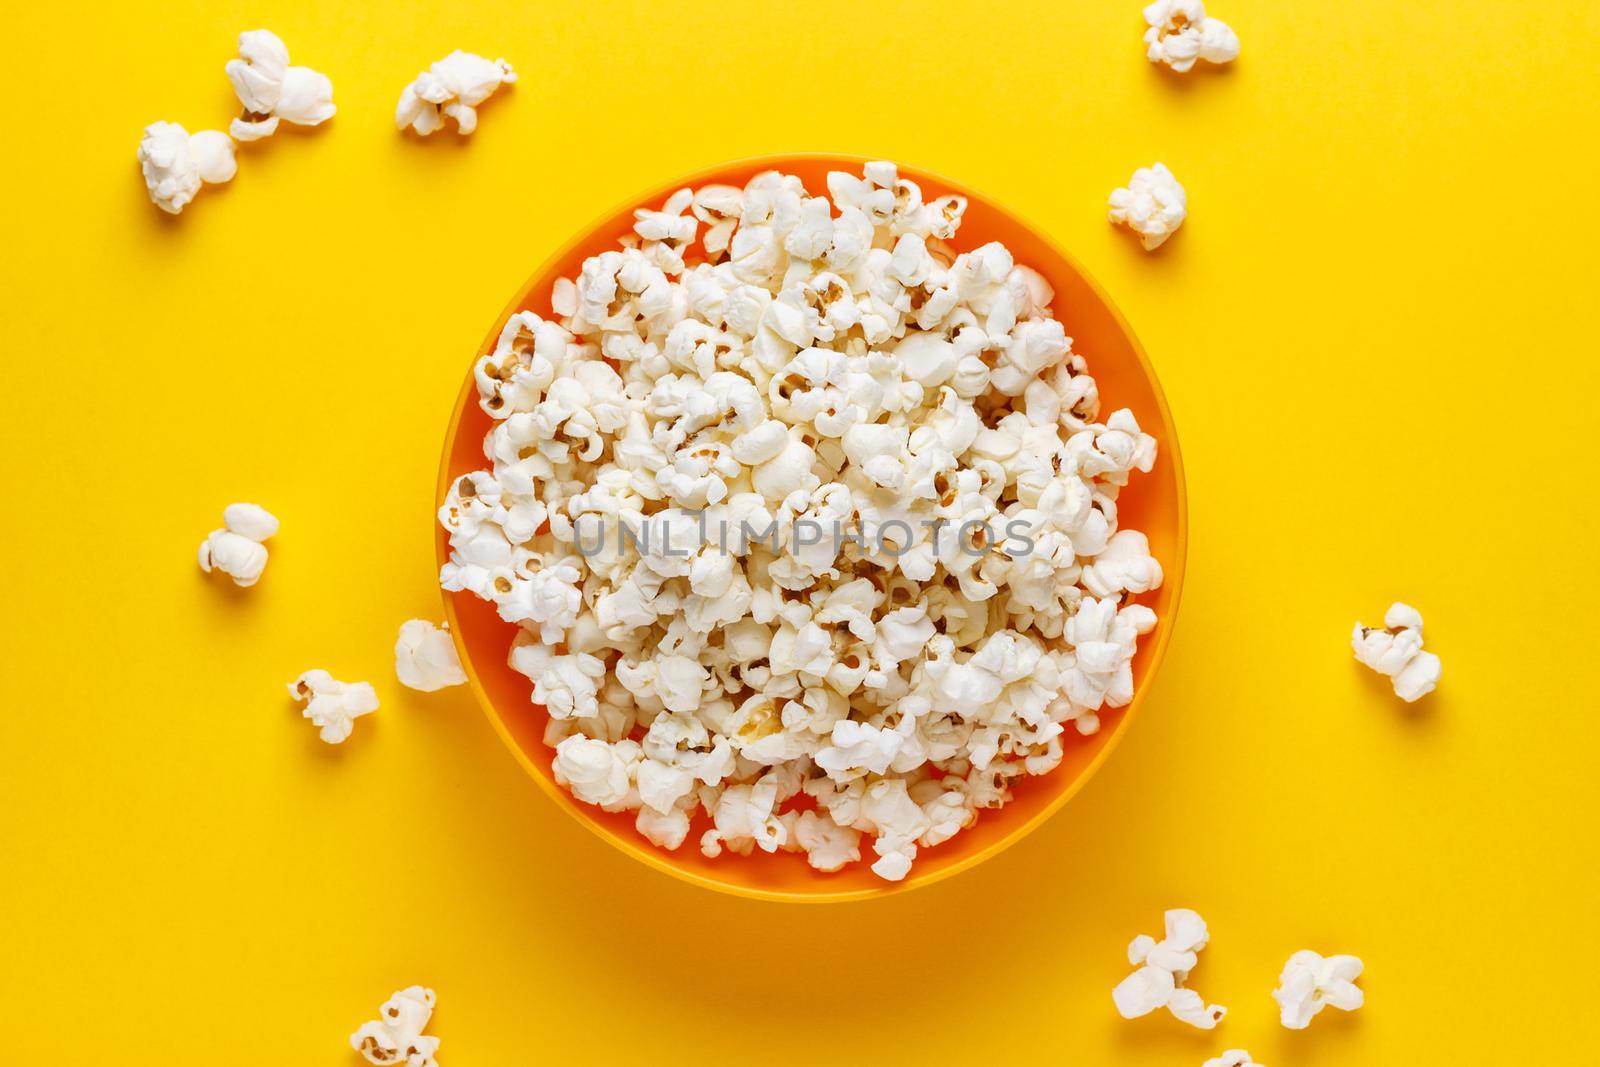 Popcorn in an orange bowl on yellow background. Horizontal image. Top view.